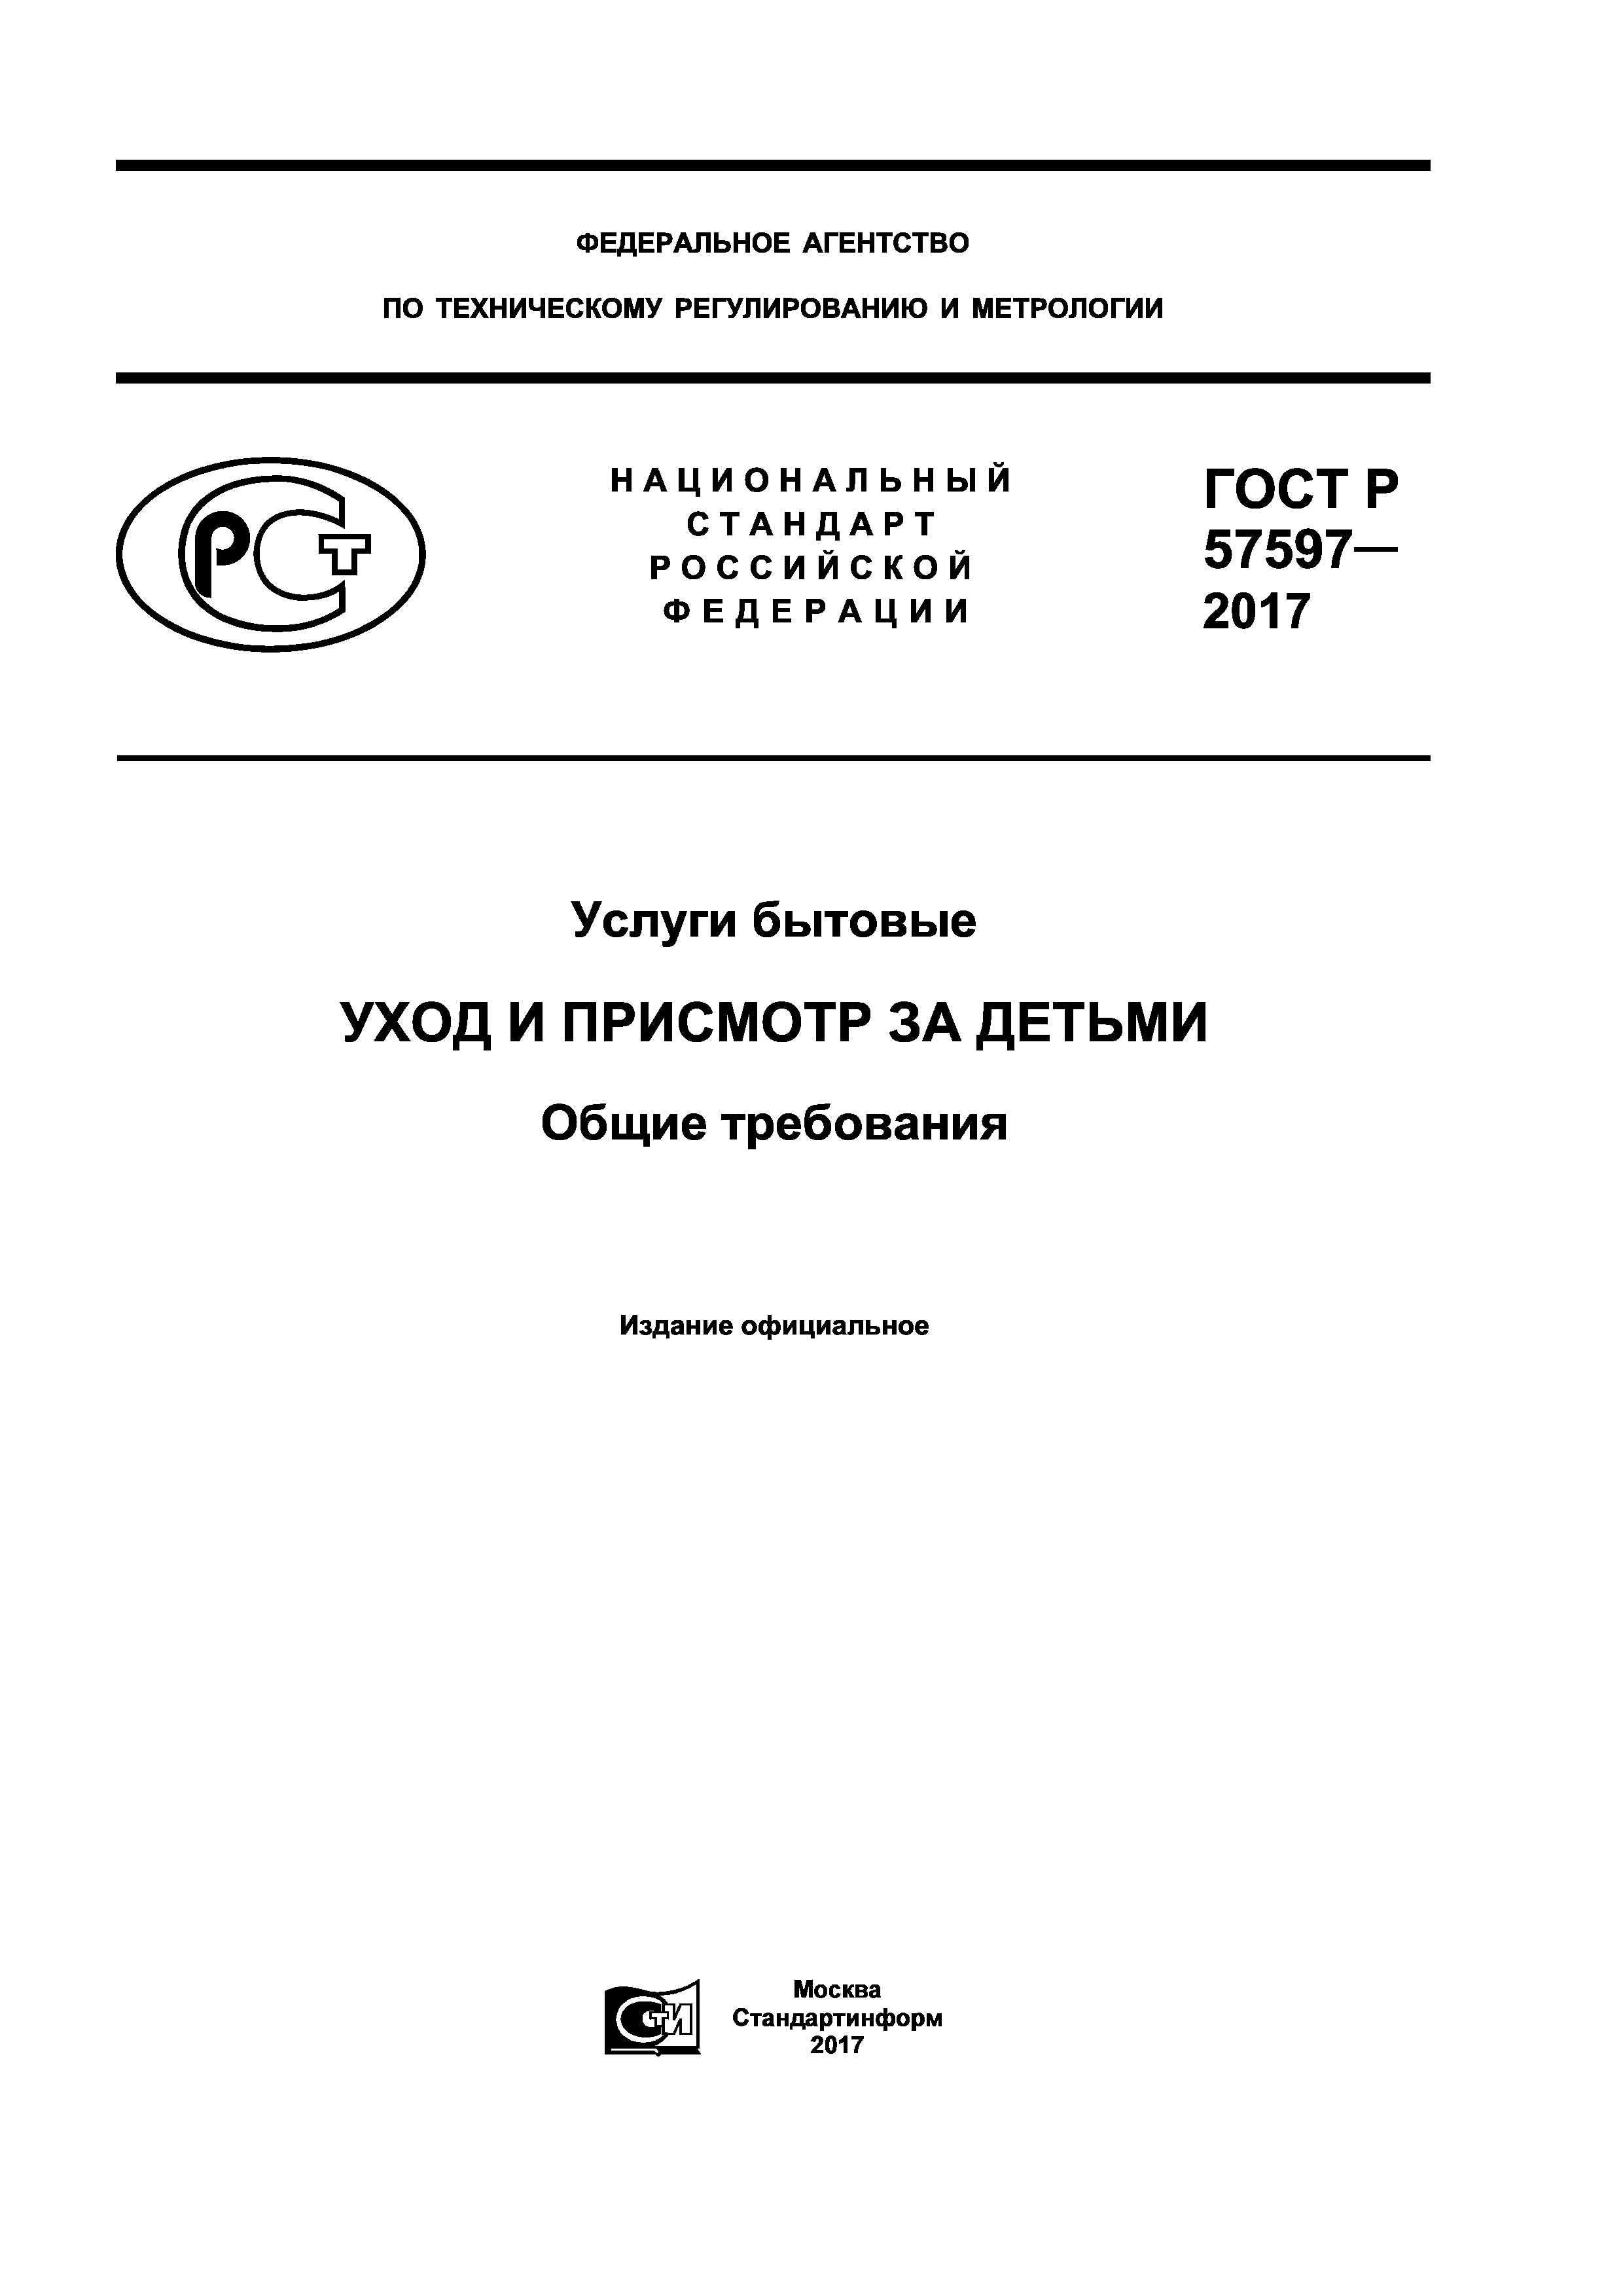 ГОСТ Р 57597-2017